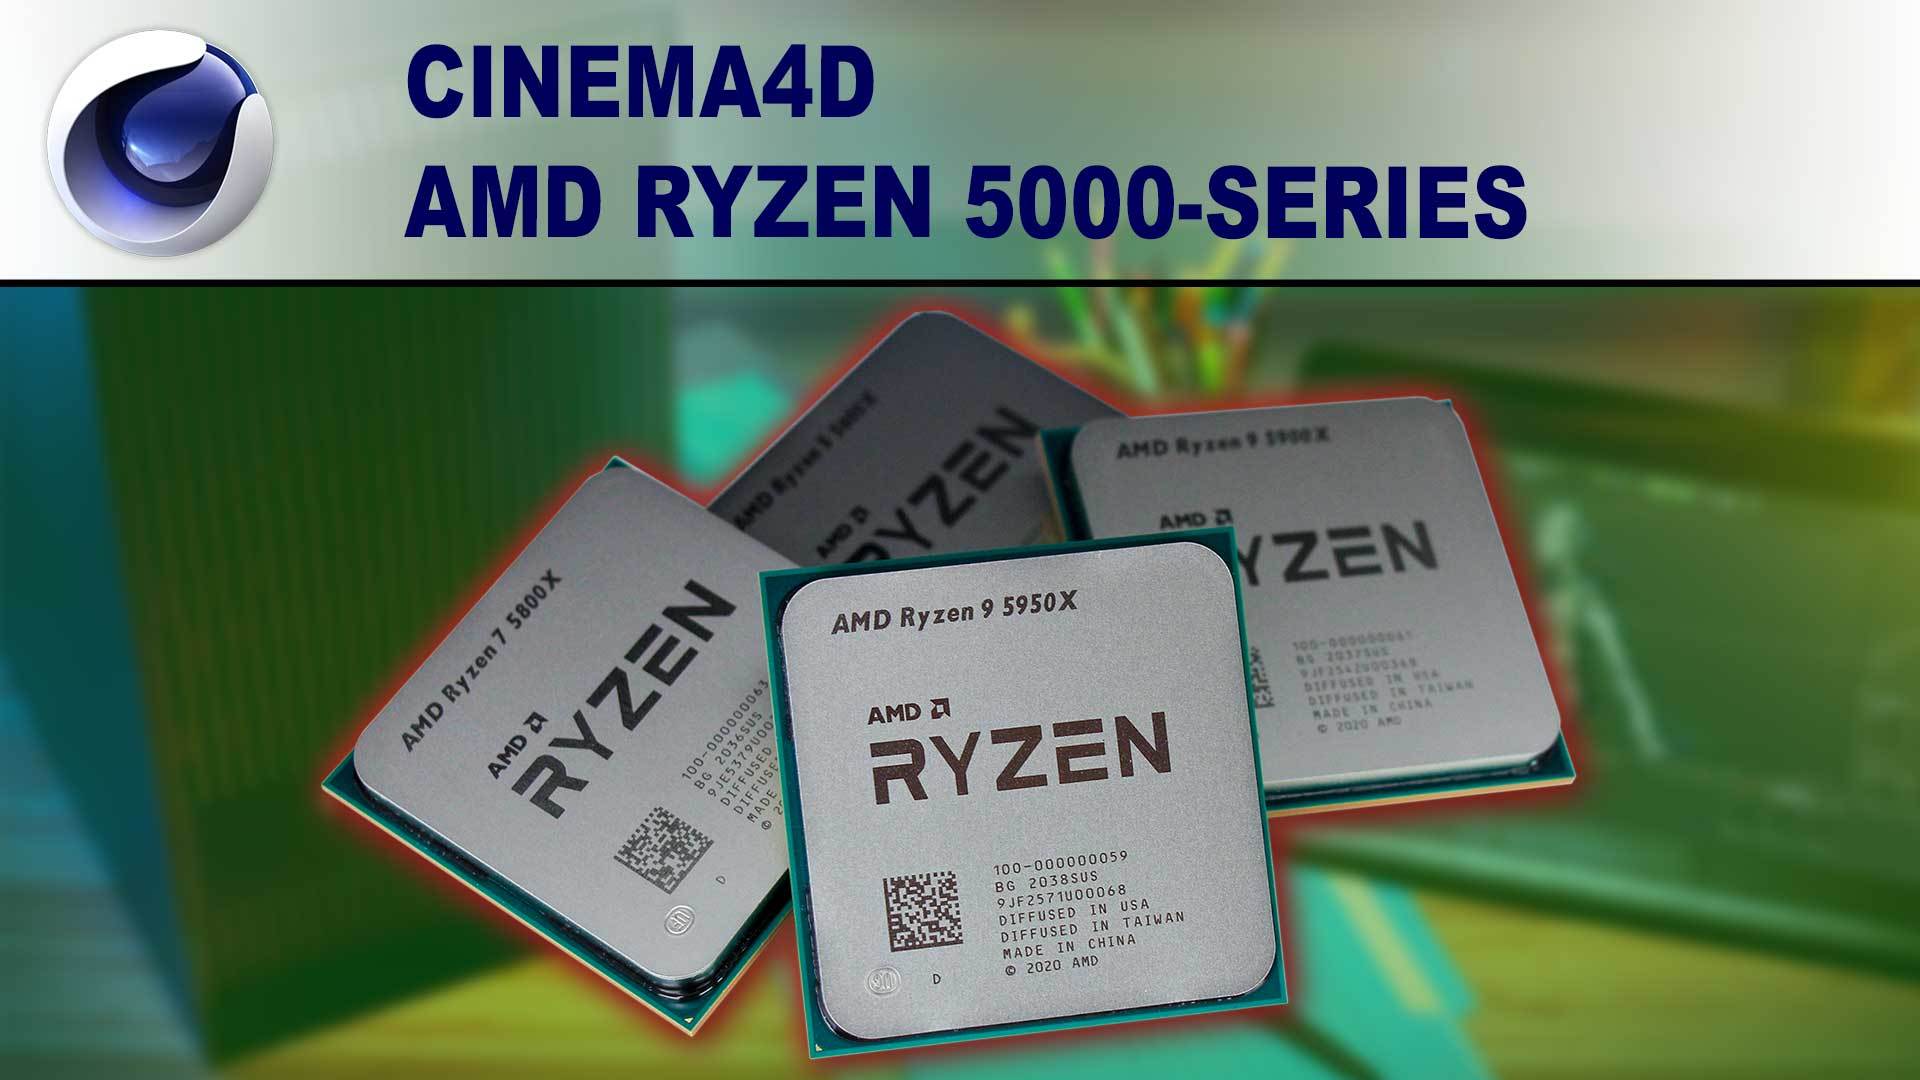 Cinema 4D AMD Ryzen 5000 Series